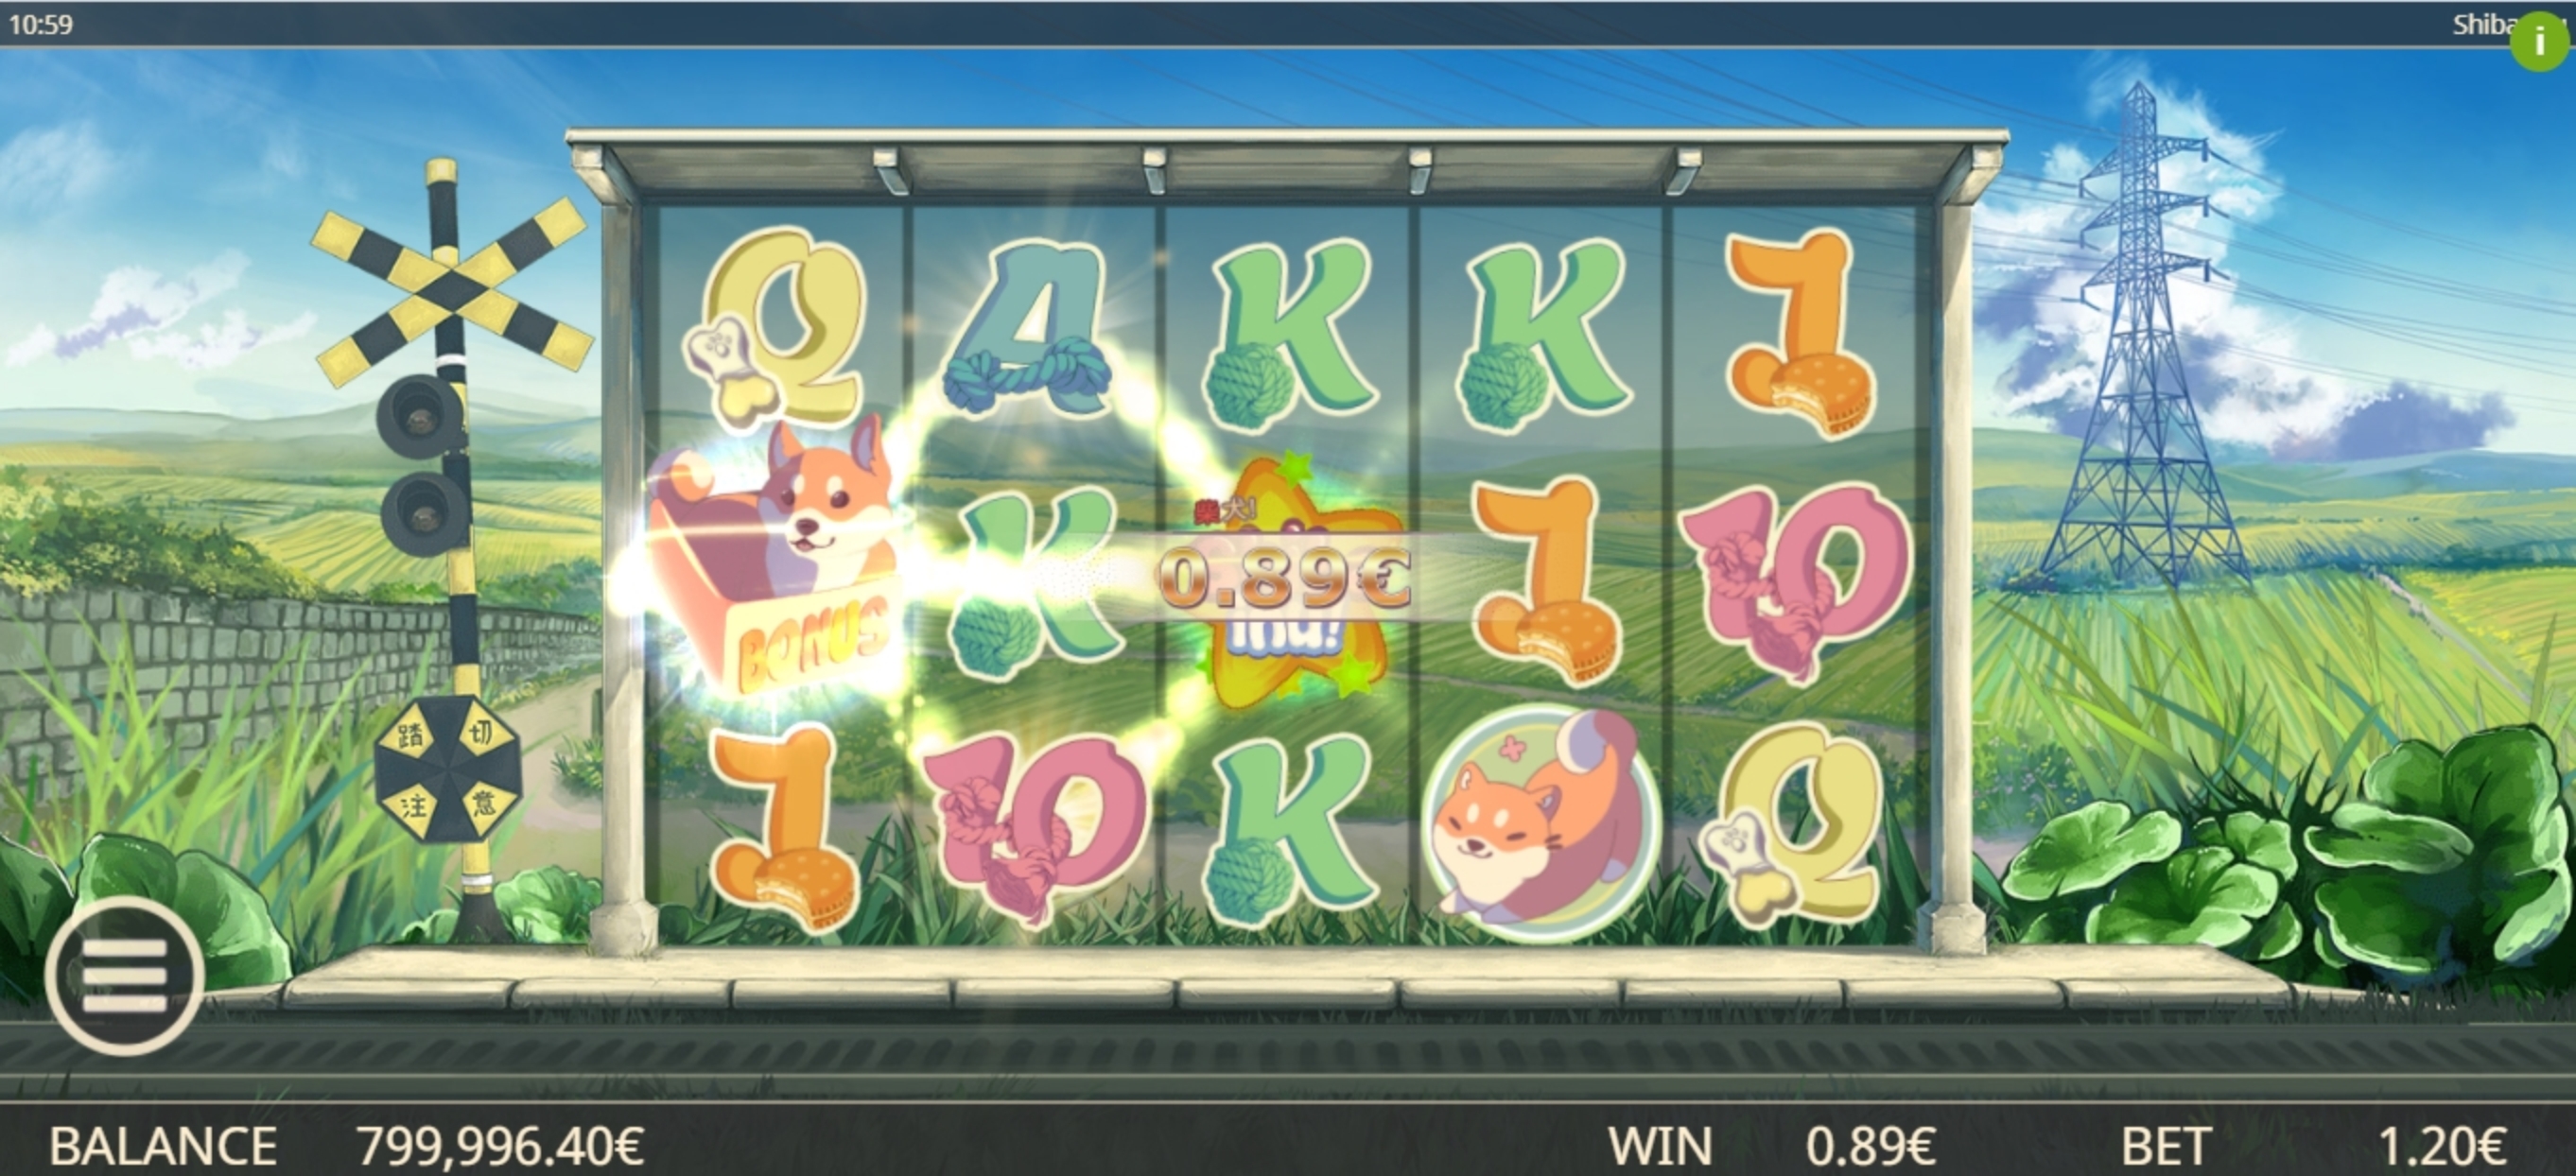 Win Money in Shiba Inu Free Slot Game by Gamatron